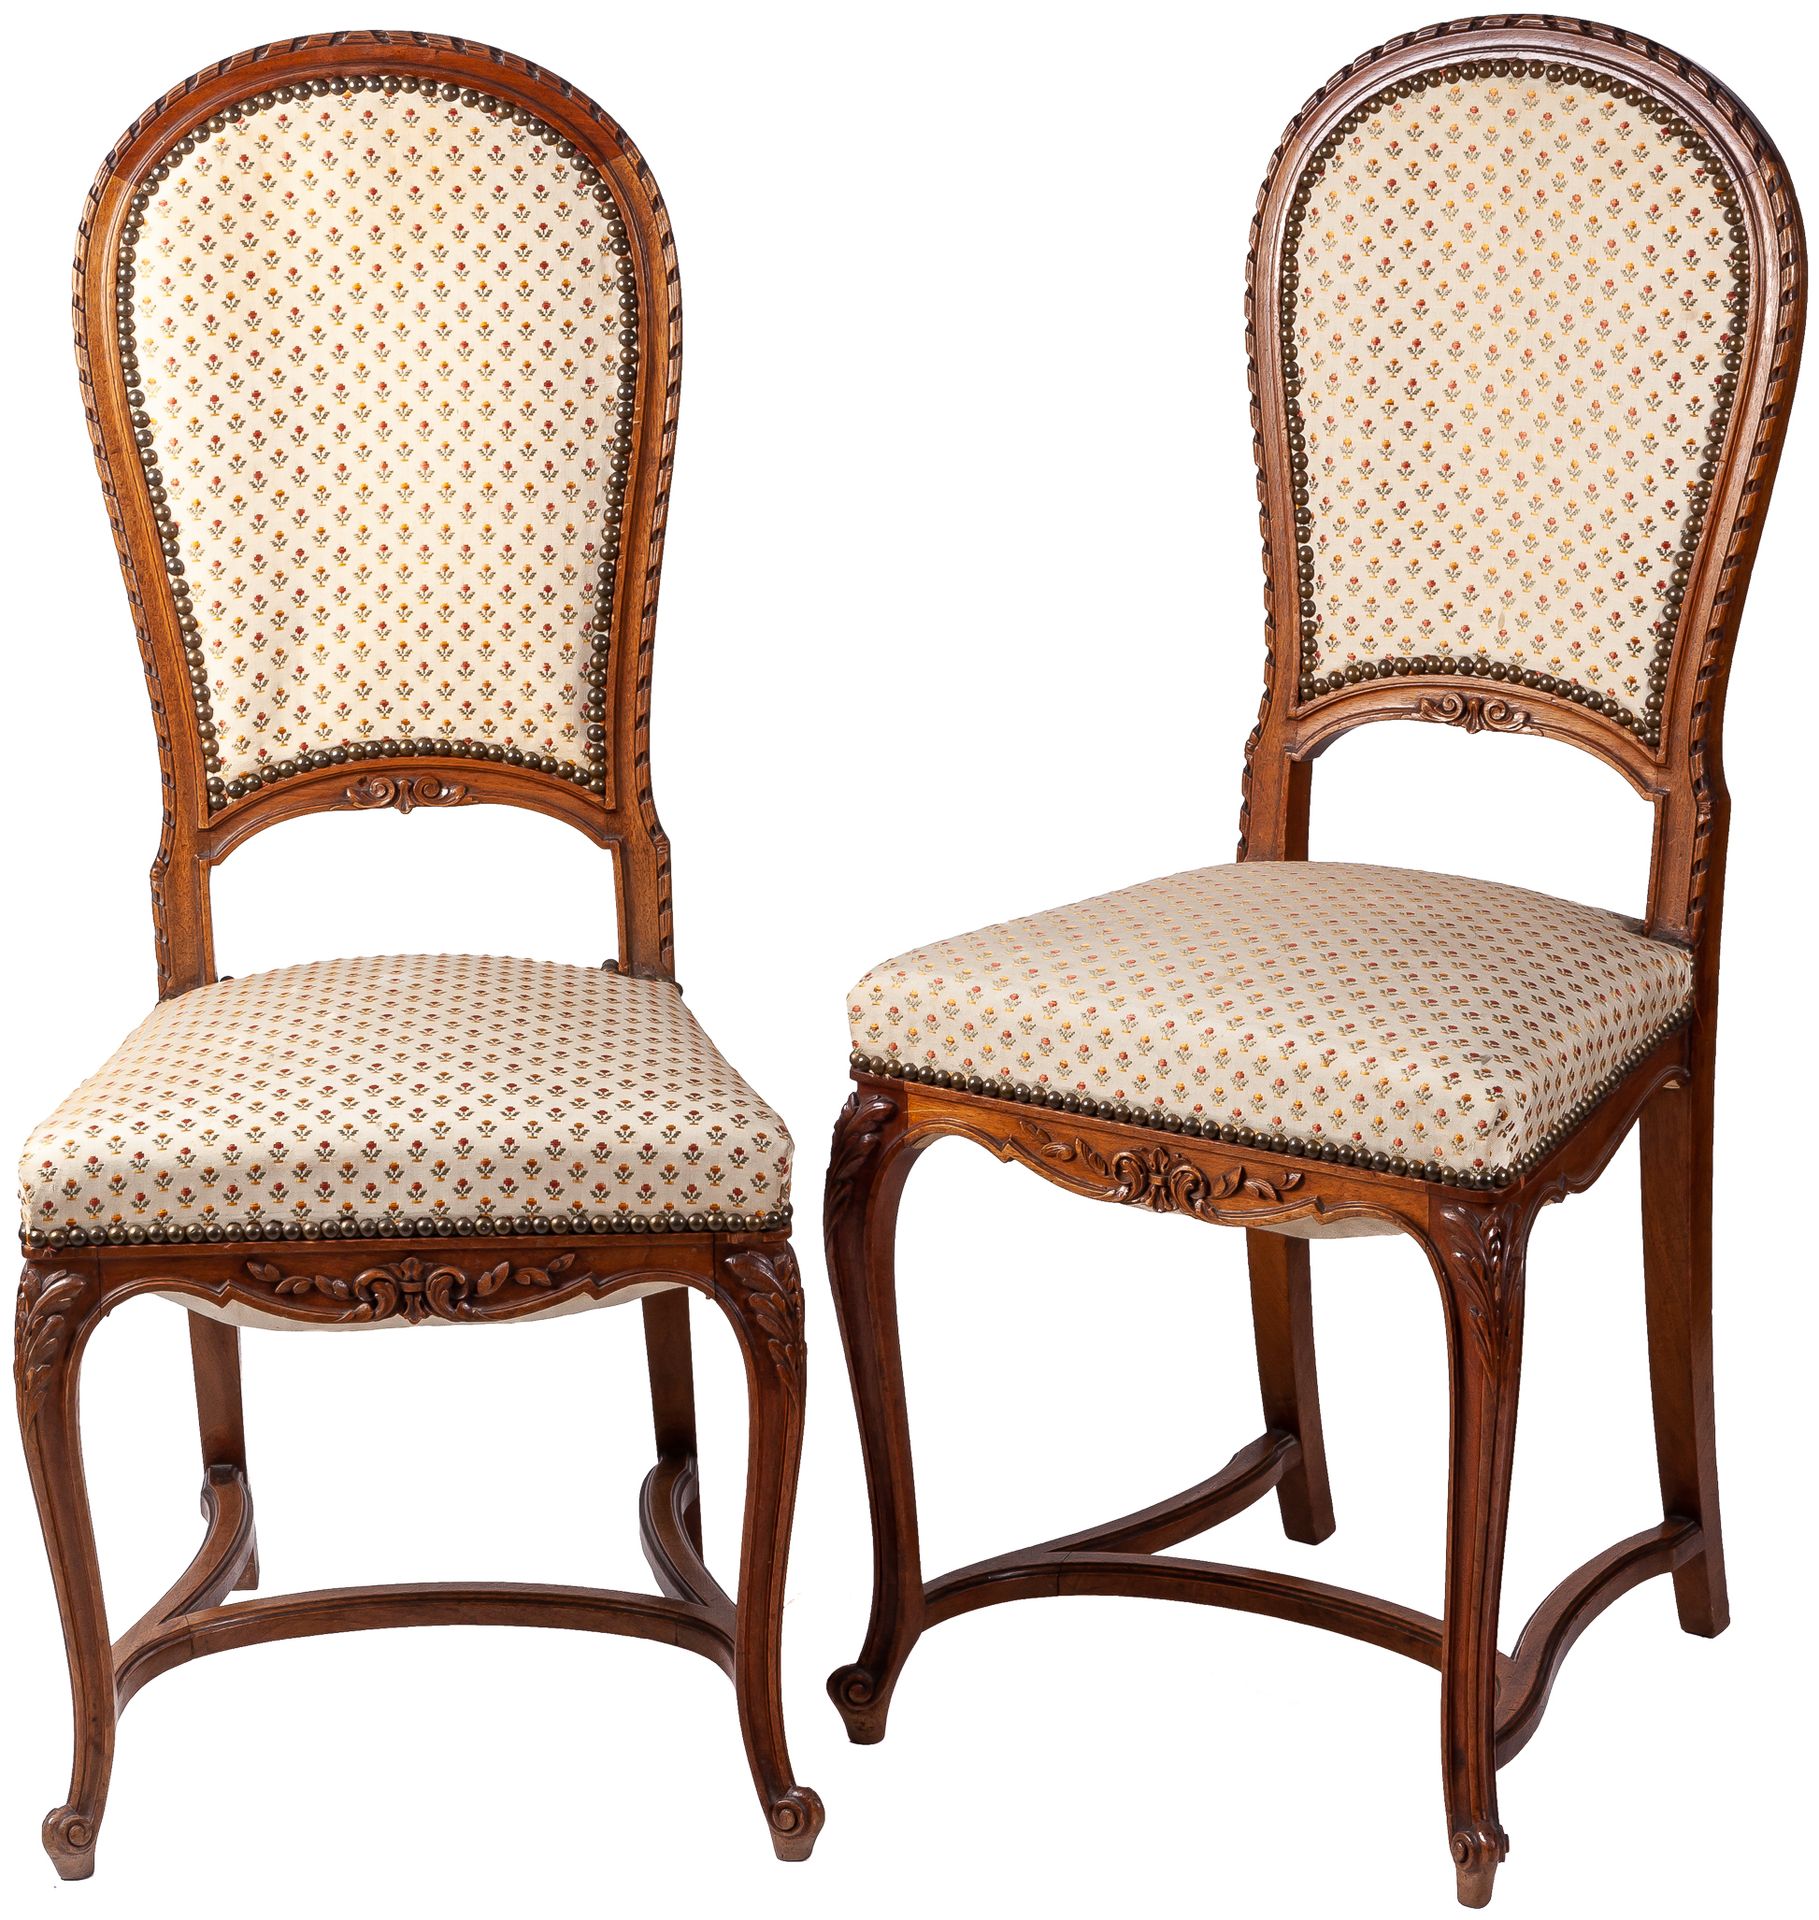 Null 一对路易十五/路易十六过渡风格的椅子。20世纪

200 - 300 €